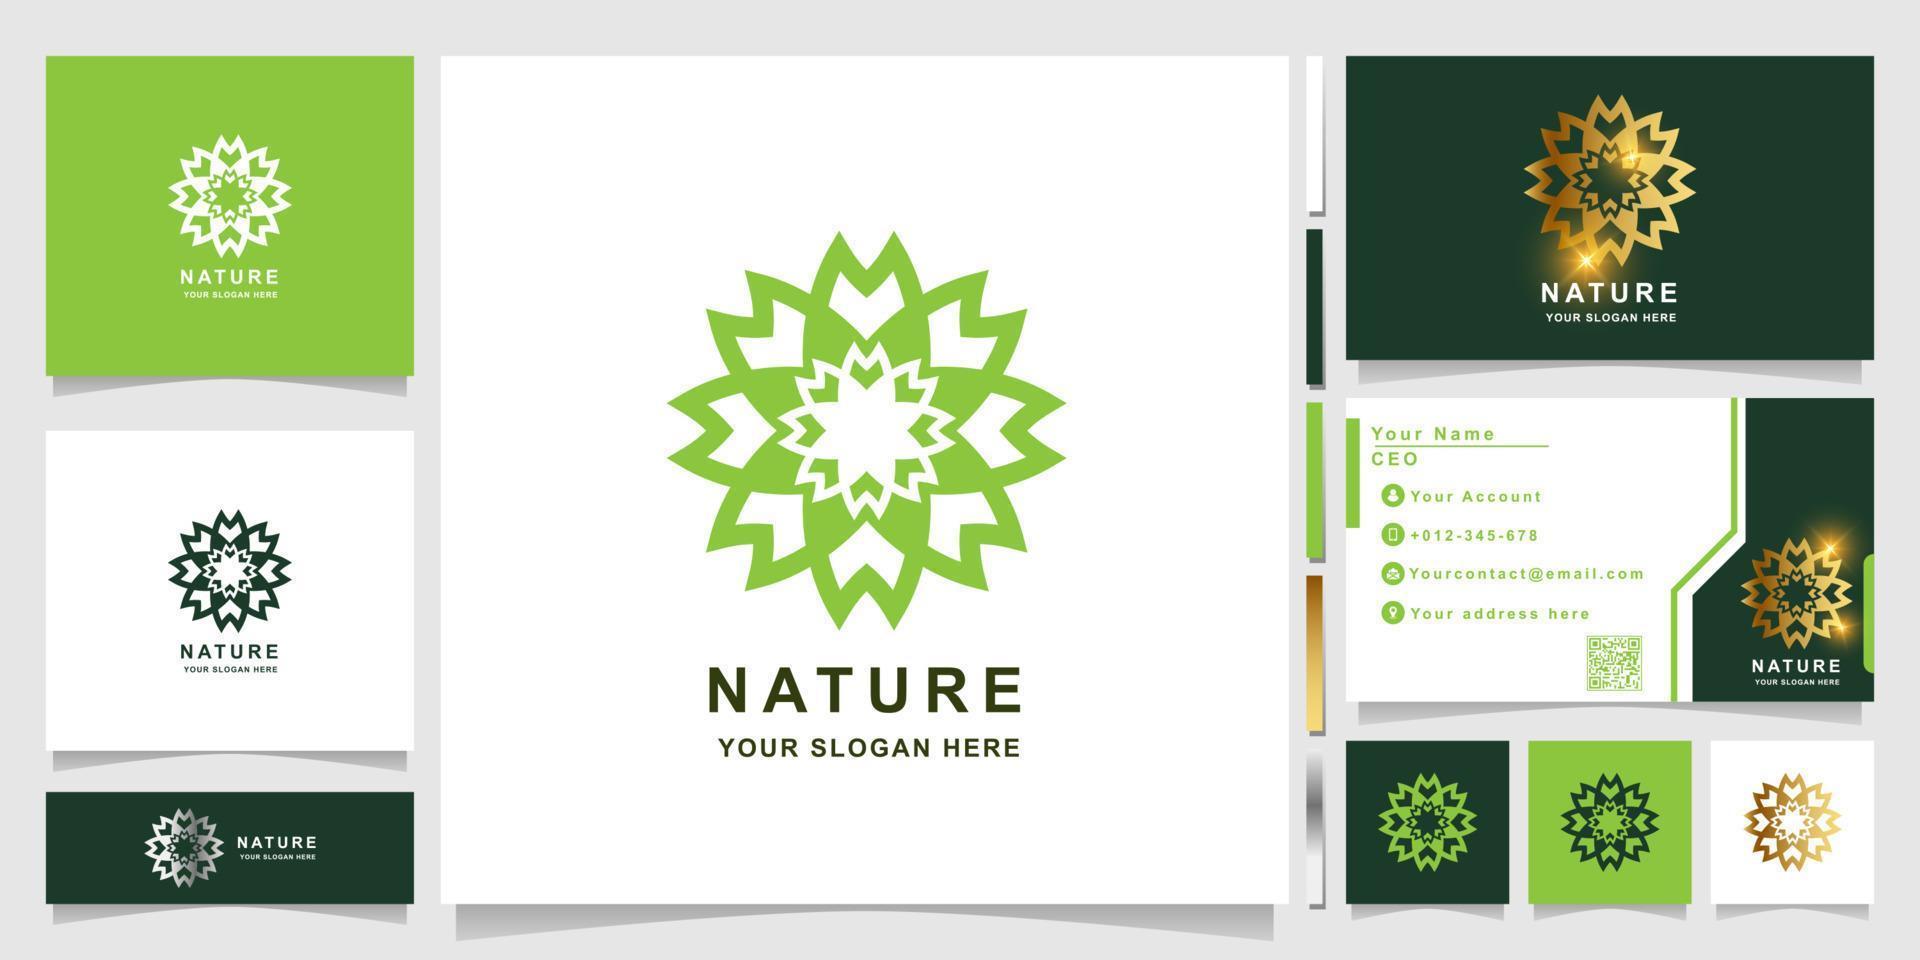 plantilla de logotipo de naturaleza, flor, boutique o adorno con diseño de tarjeta de visita. se puede usar diseño de logo de spa, salón, belleza o boutique. vector